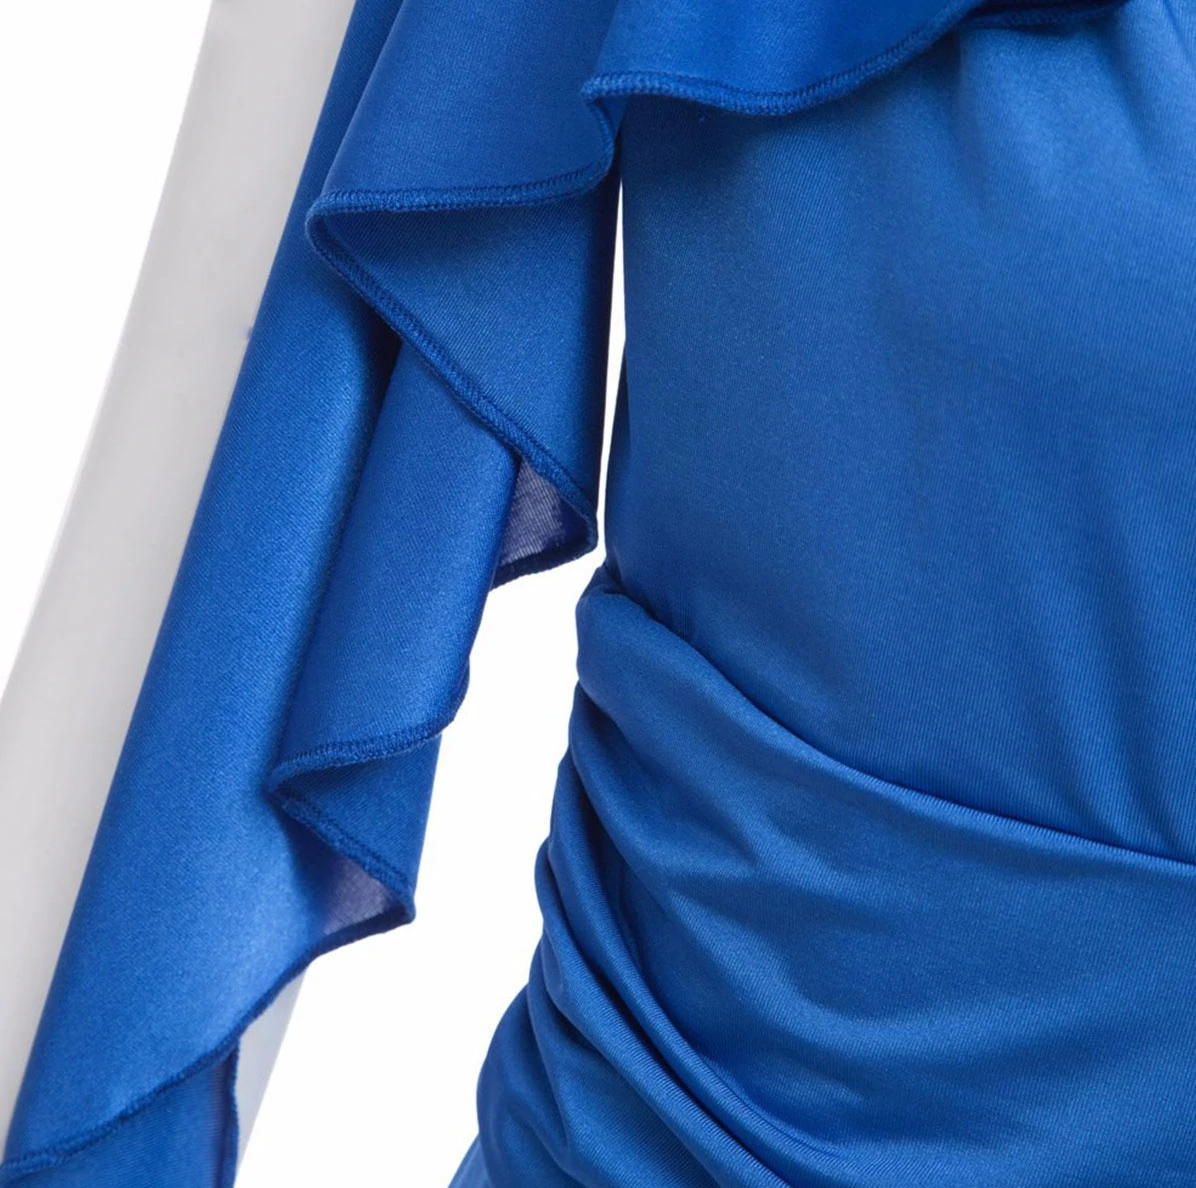 M0188 blue6 Short Sleeve Dresses maureens.com boutique